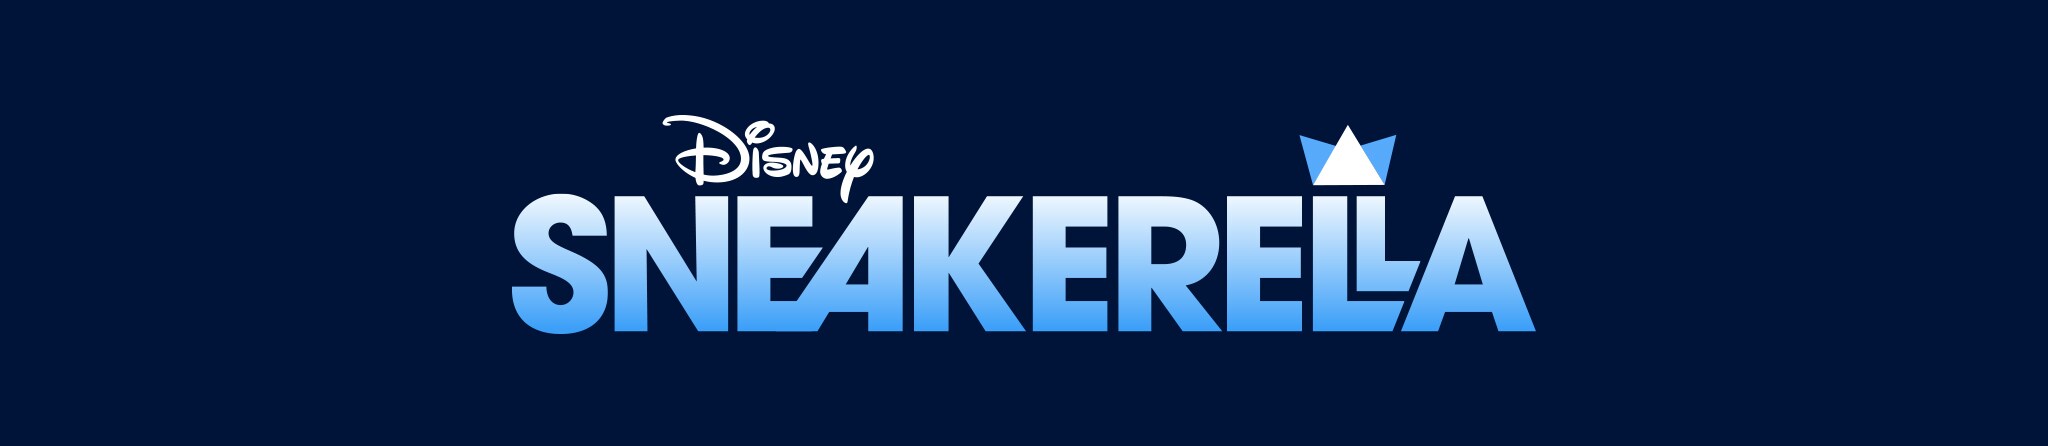 Disney Sneakerella logo